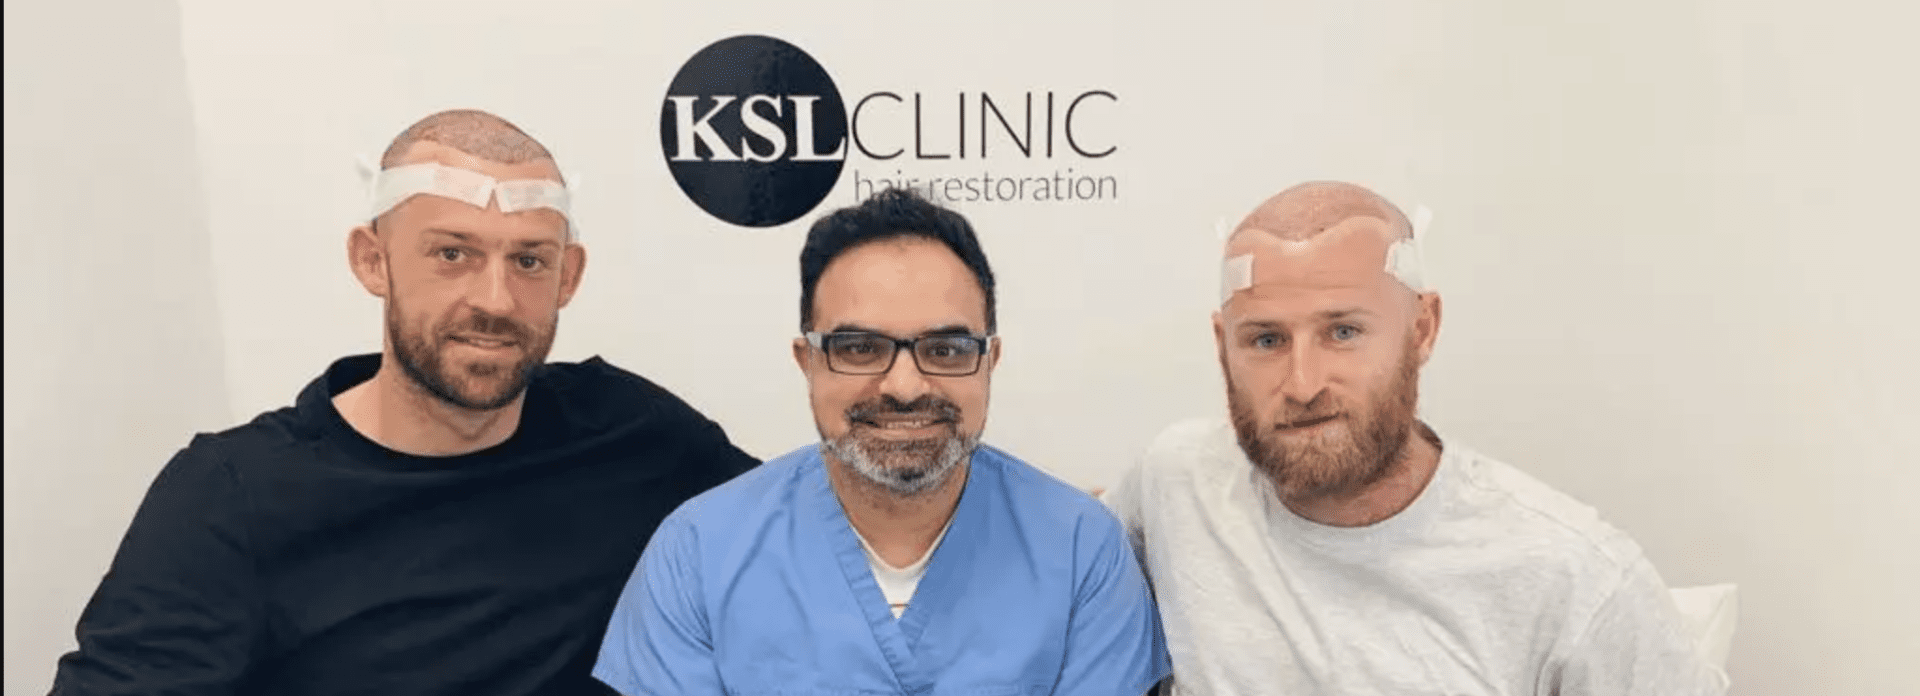 The KSL Clinic Ltd Heading Towards Further Success